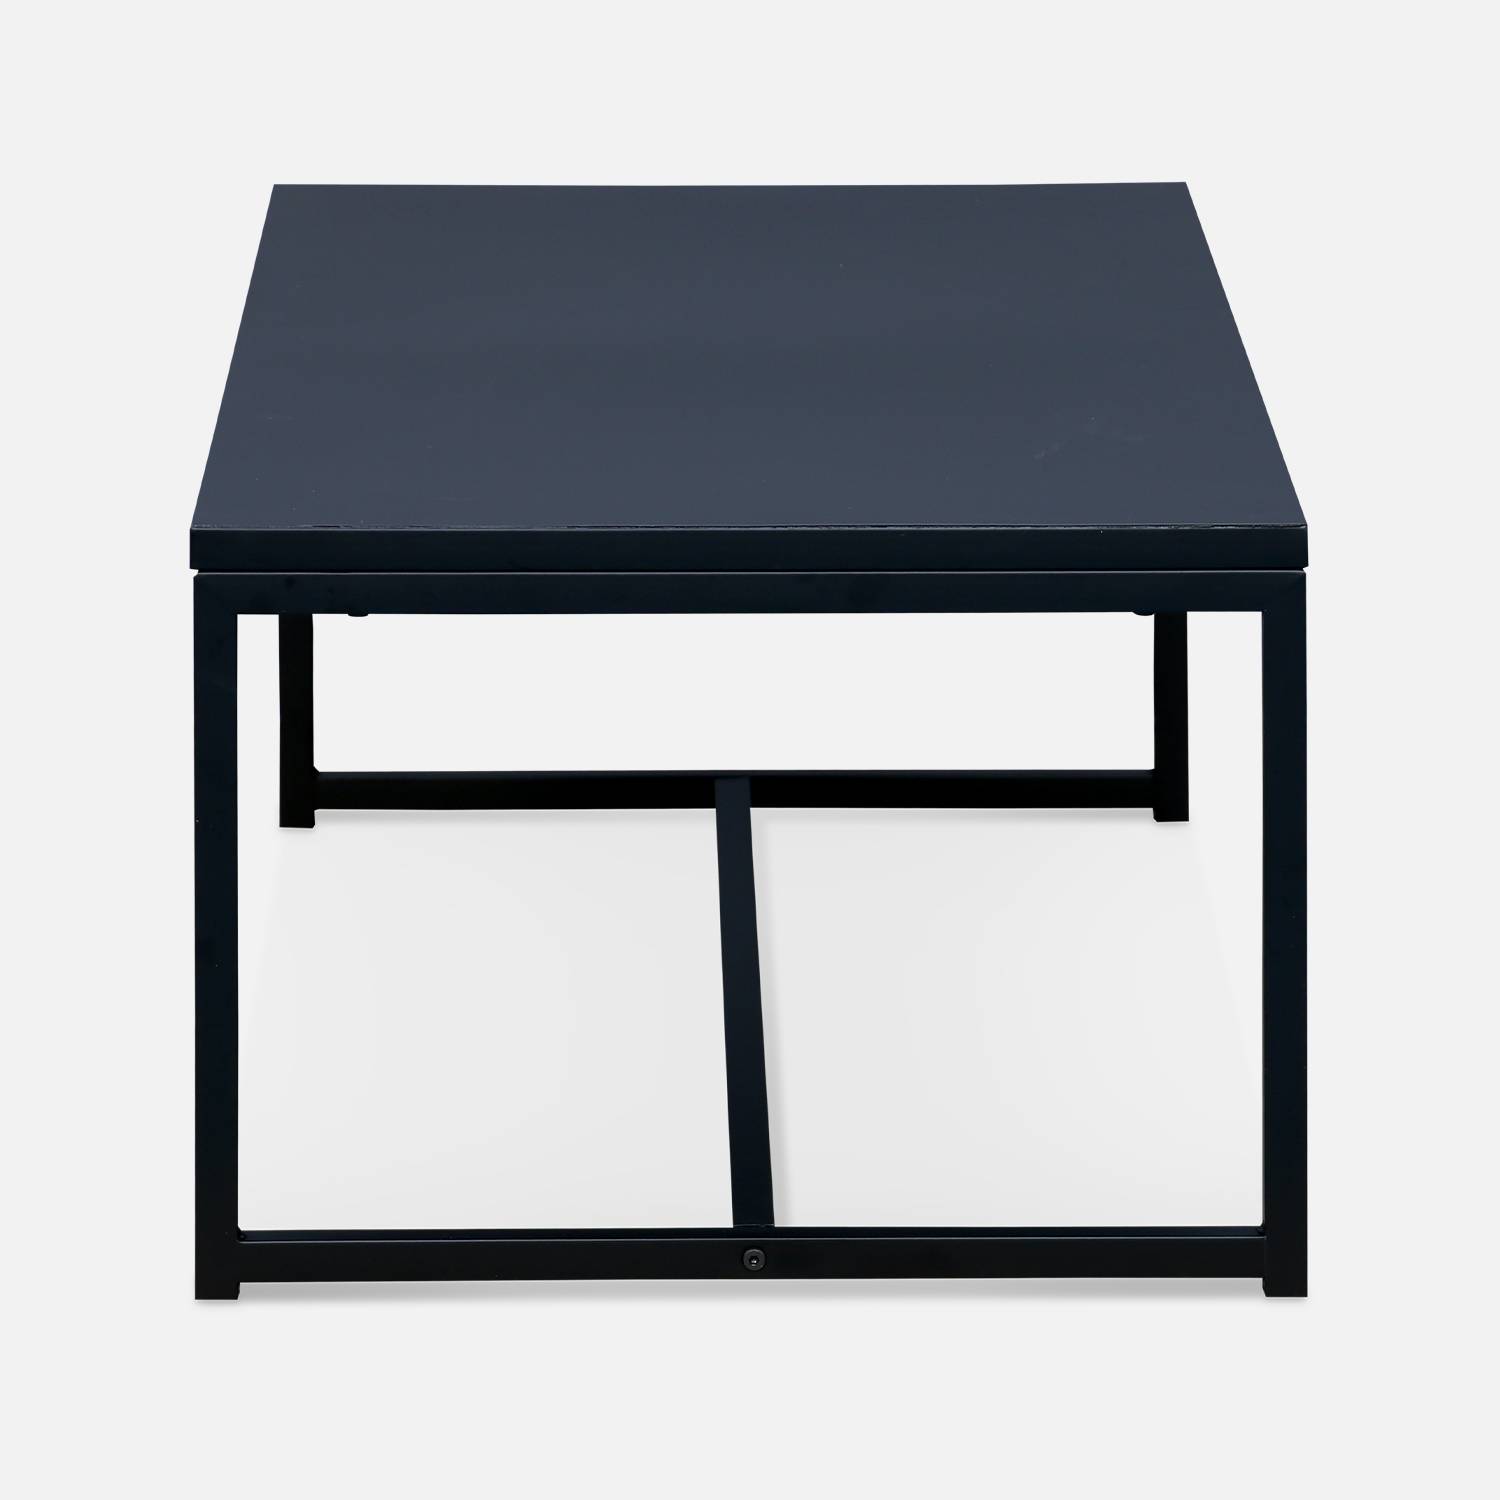 Black metal coffee table 100x50x36cm - Industrial - metal legs, design Photo5